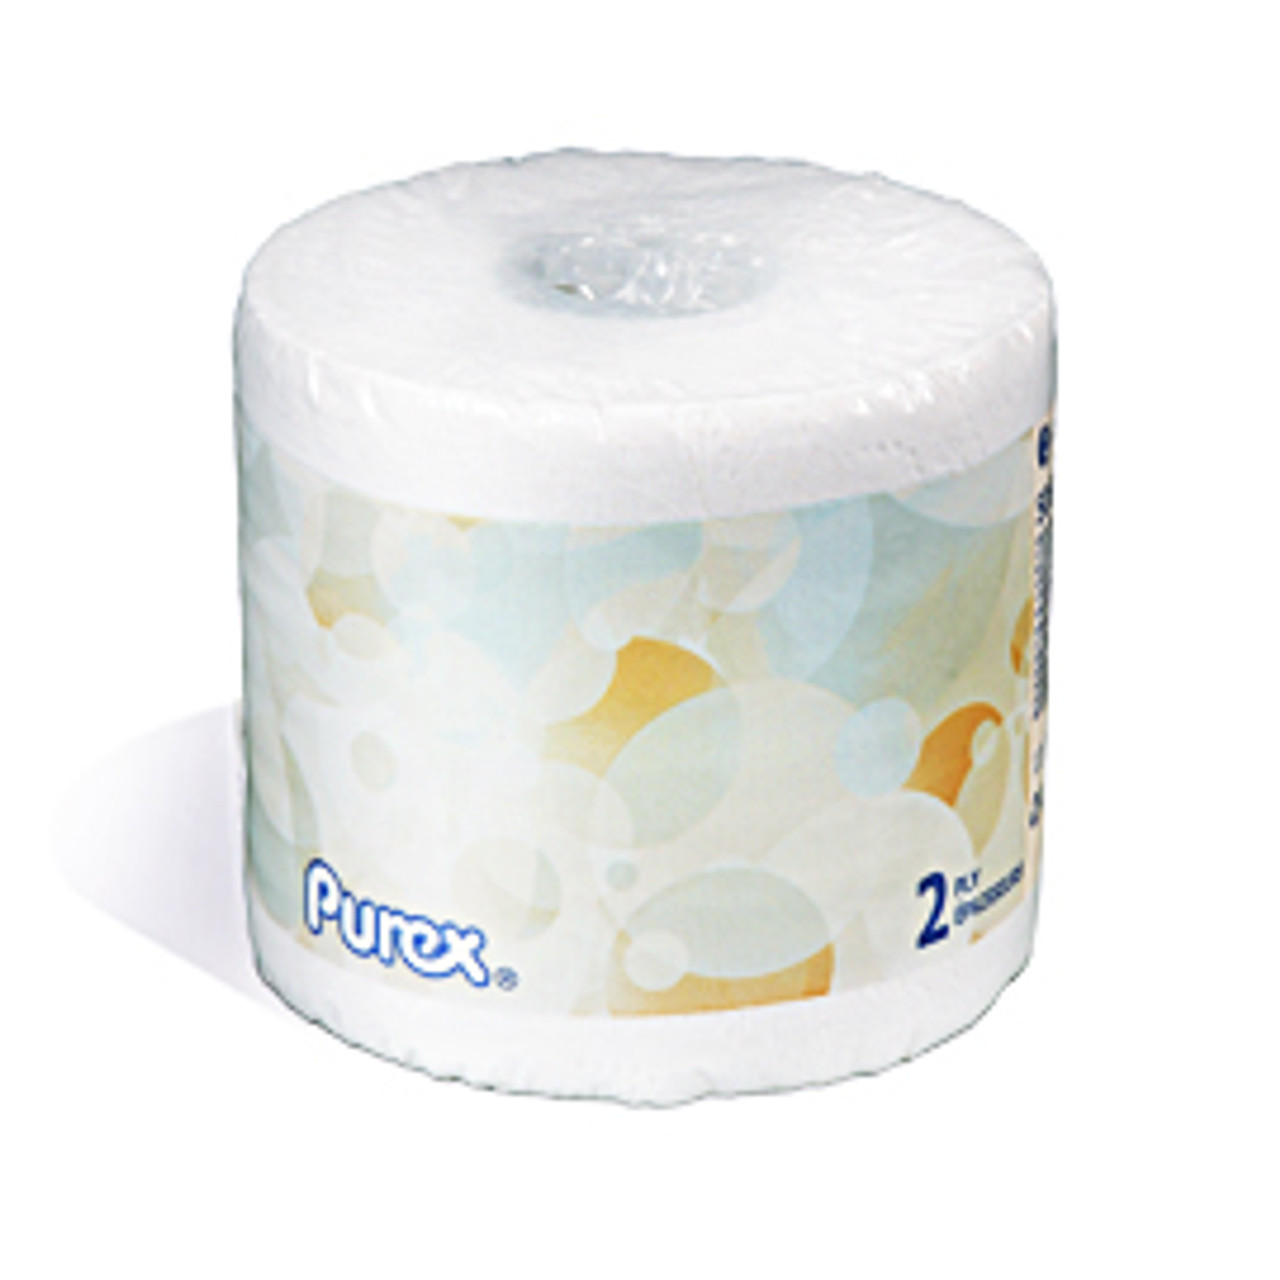 Purex 5705 2 Ply 506 Sheets Toilet Paper 60 rolls per Case